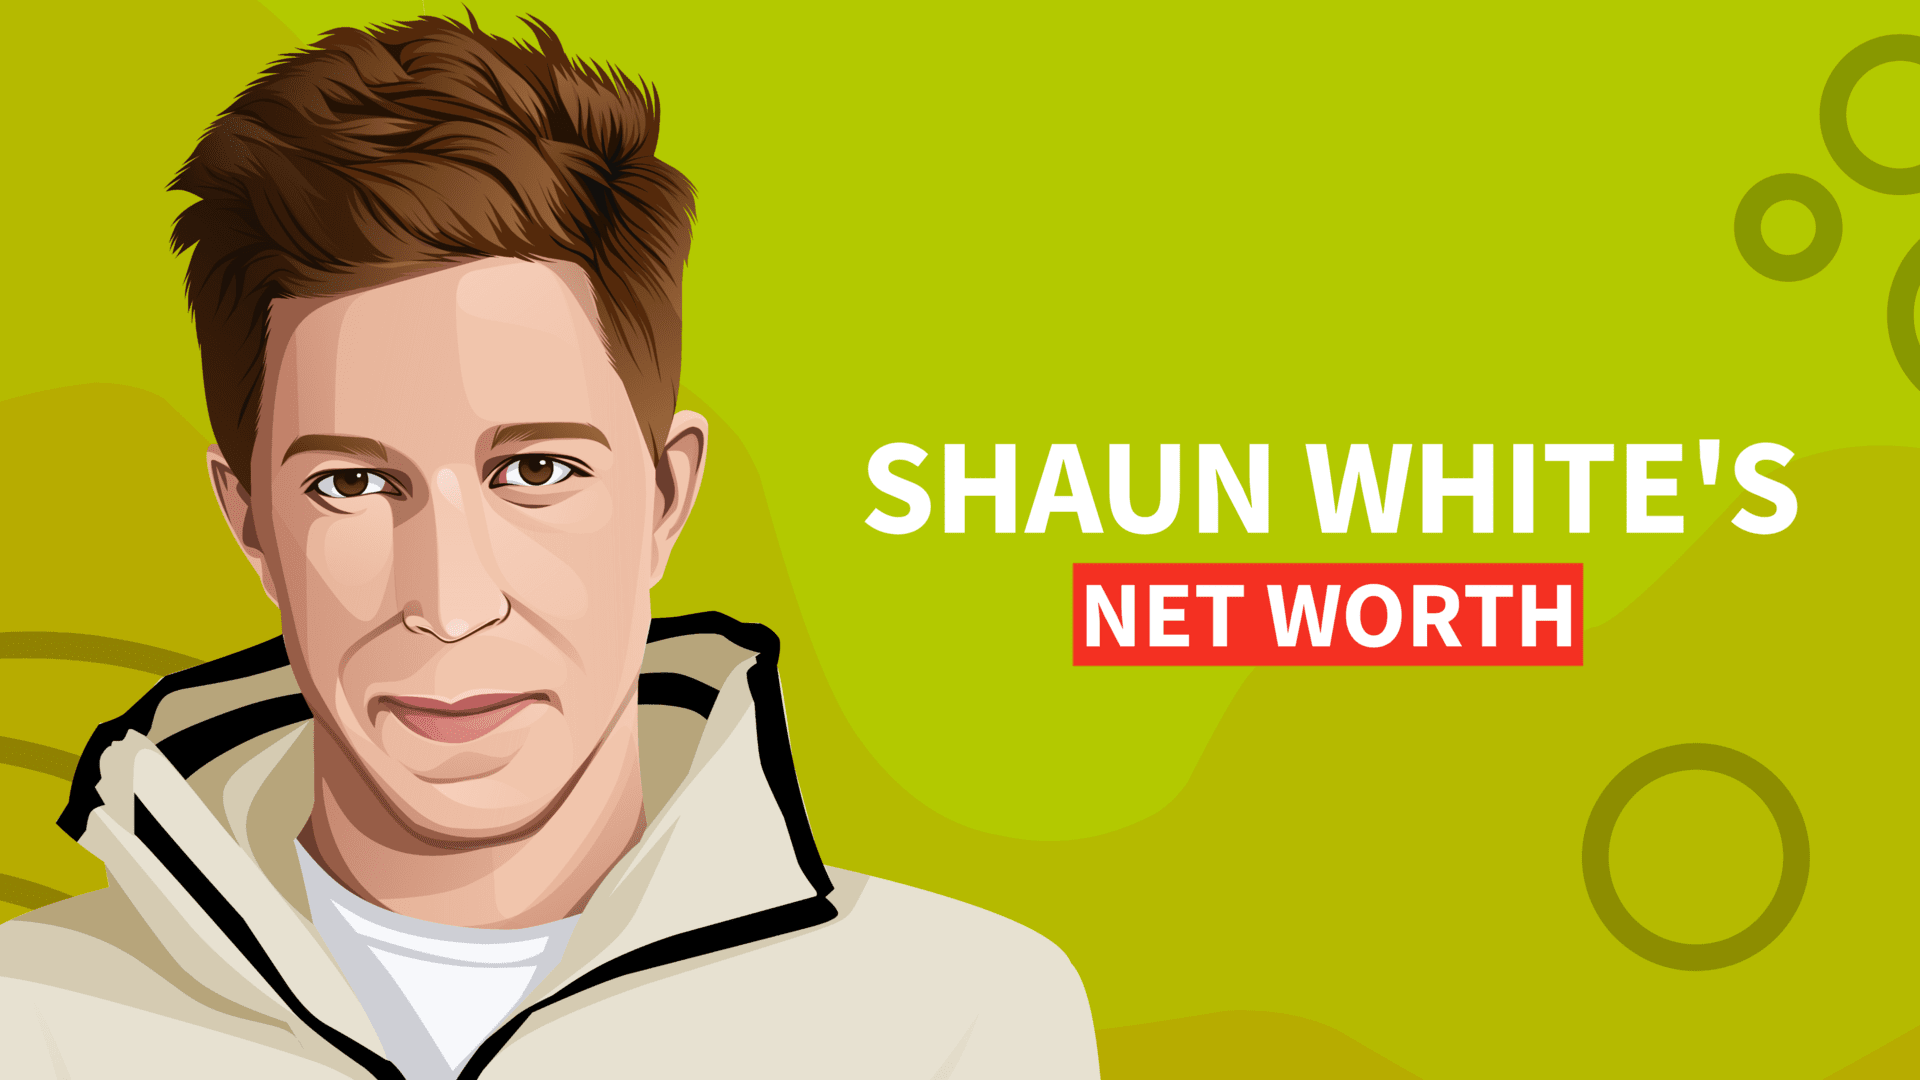 Despite His Humble Beginnings, Shaun White Now Worth 65 Million